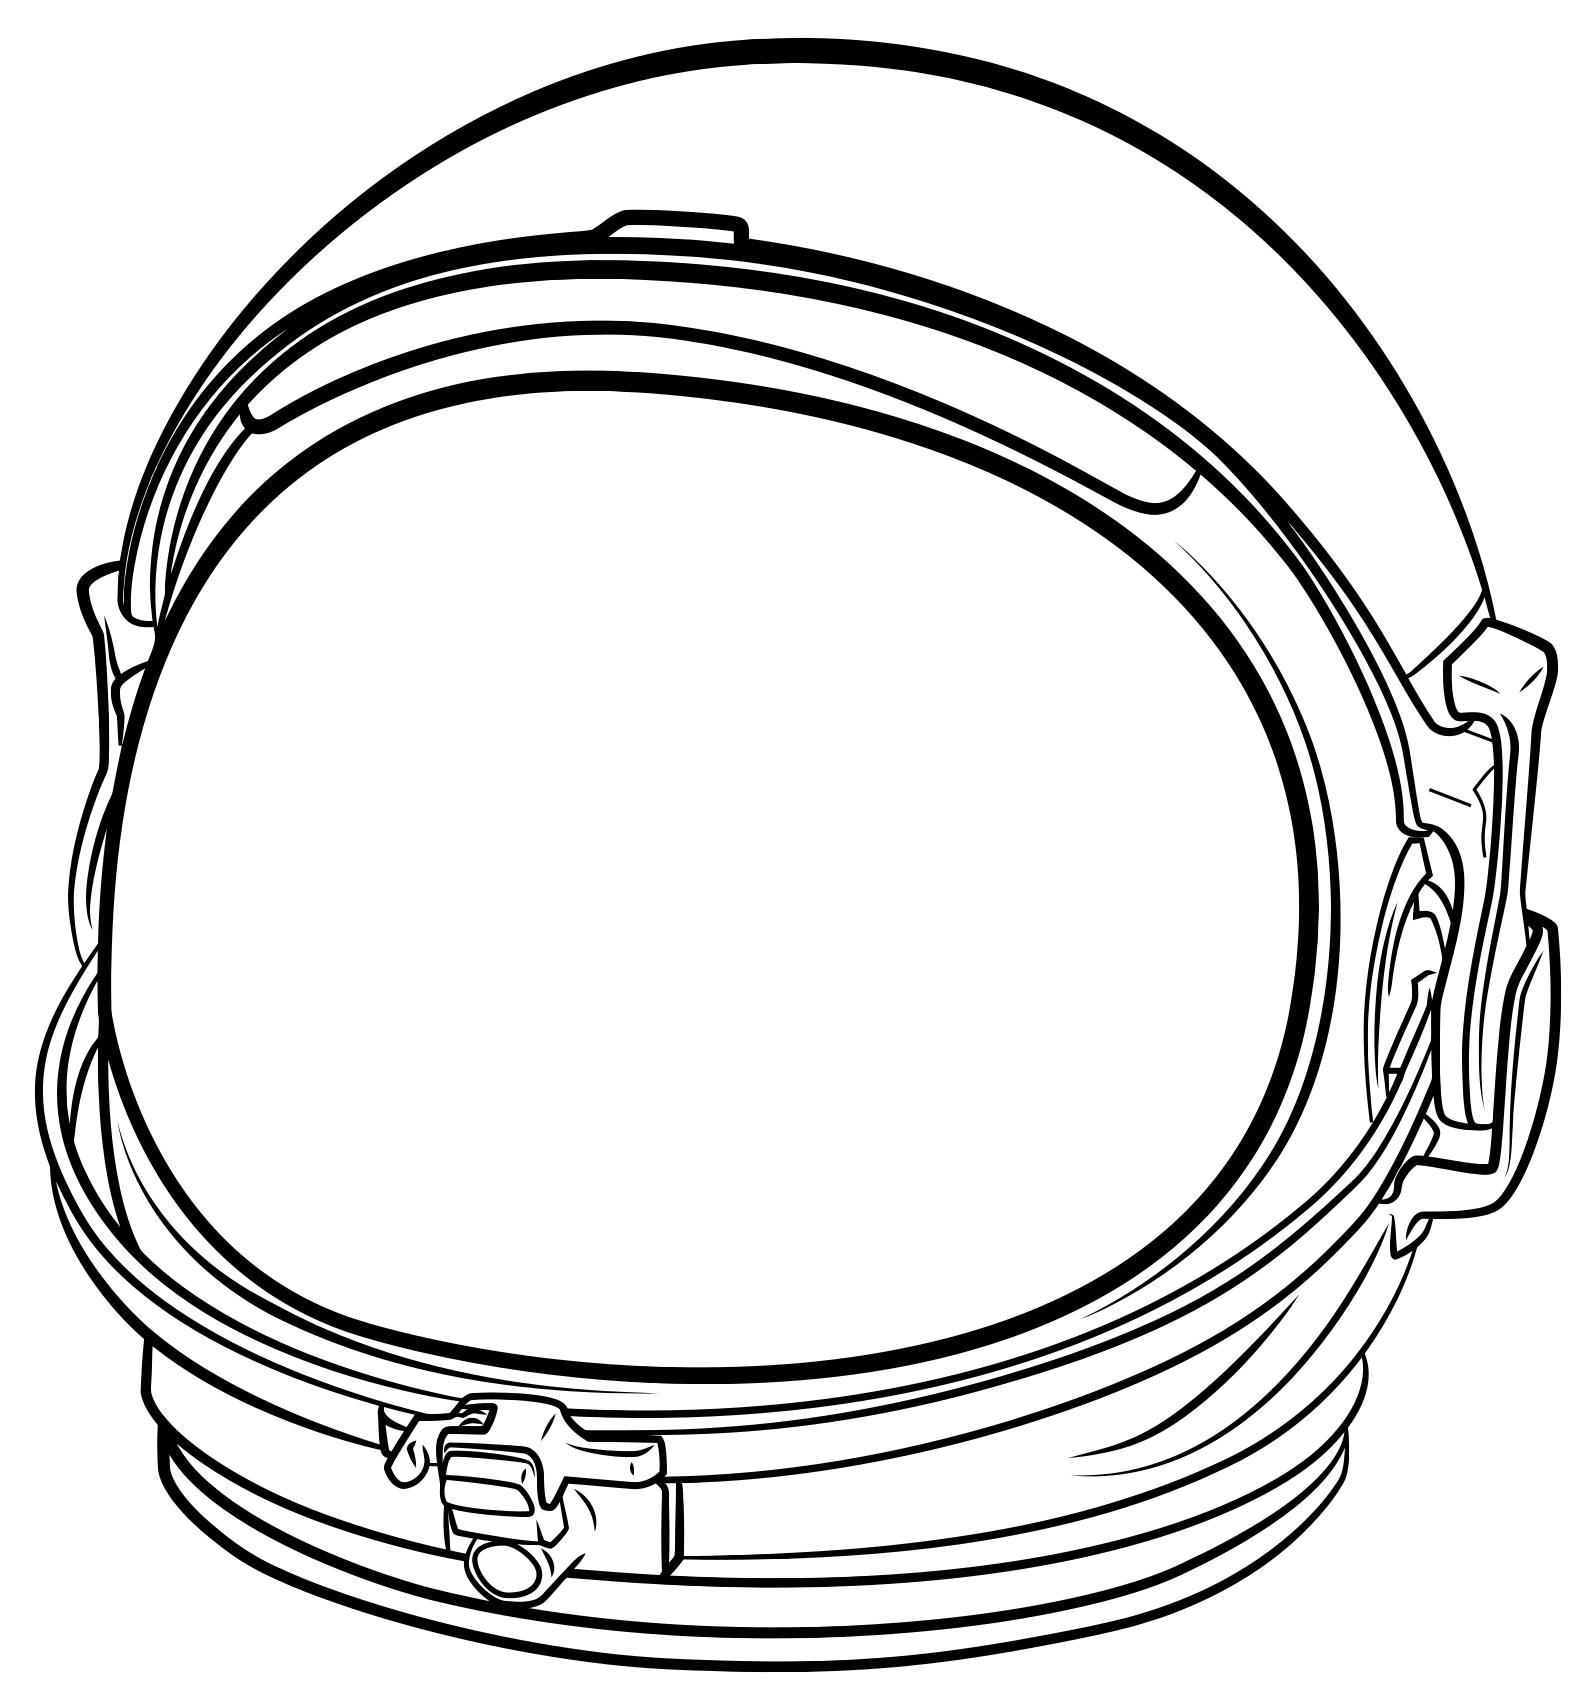 Printable Astronaut Helmet Cut Out Template